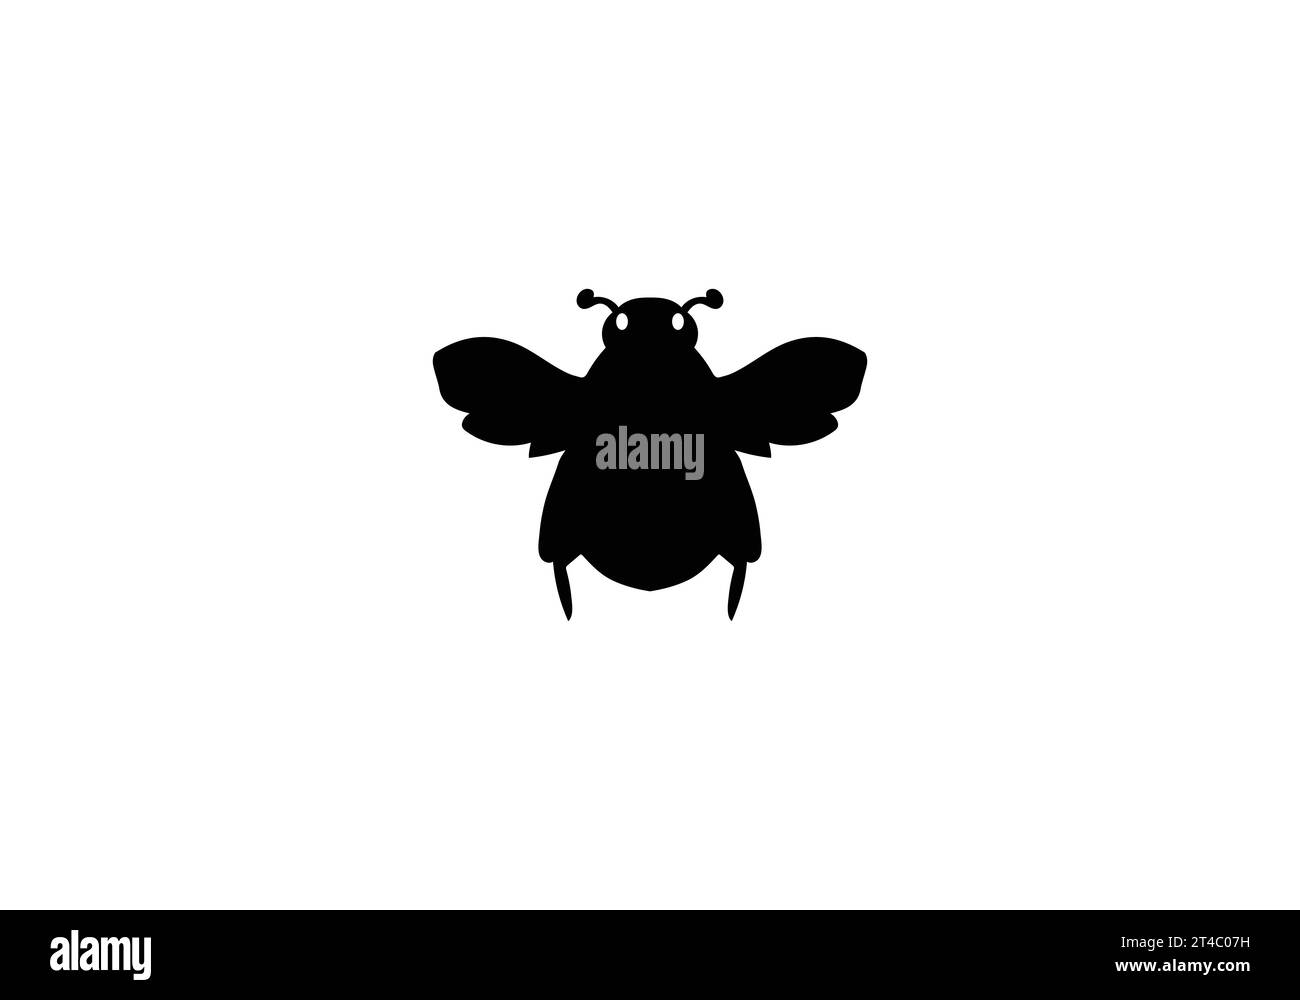 Barbut s Cuckoo Bumblebee minimal style icon illustration Stock Vector